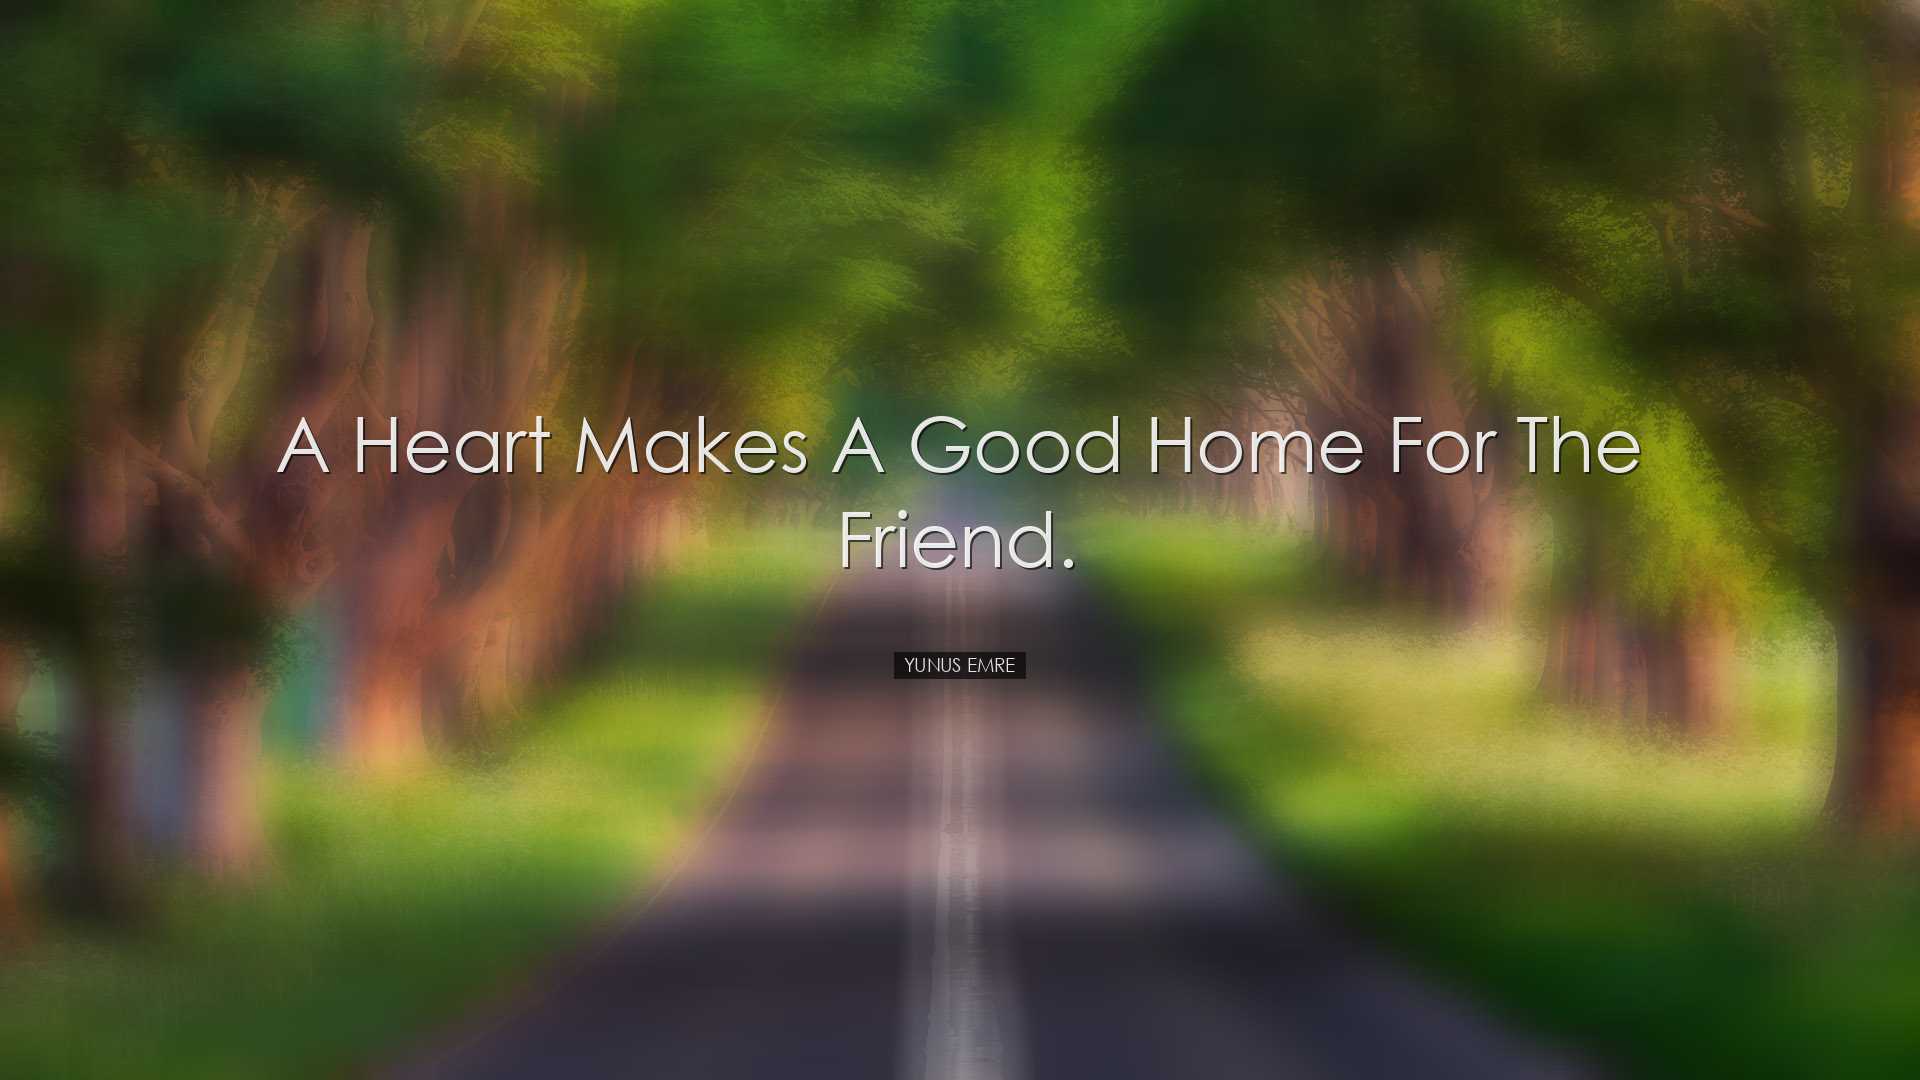 A heart makes a good home for the friend. - Yunus Emre